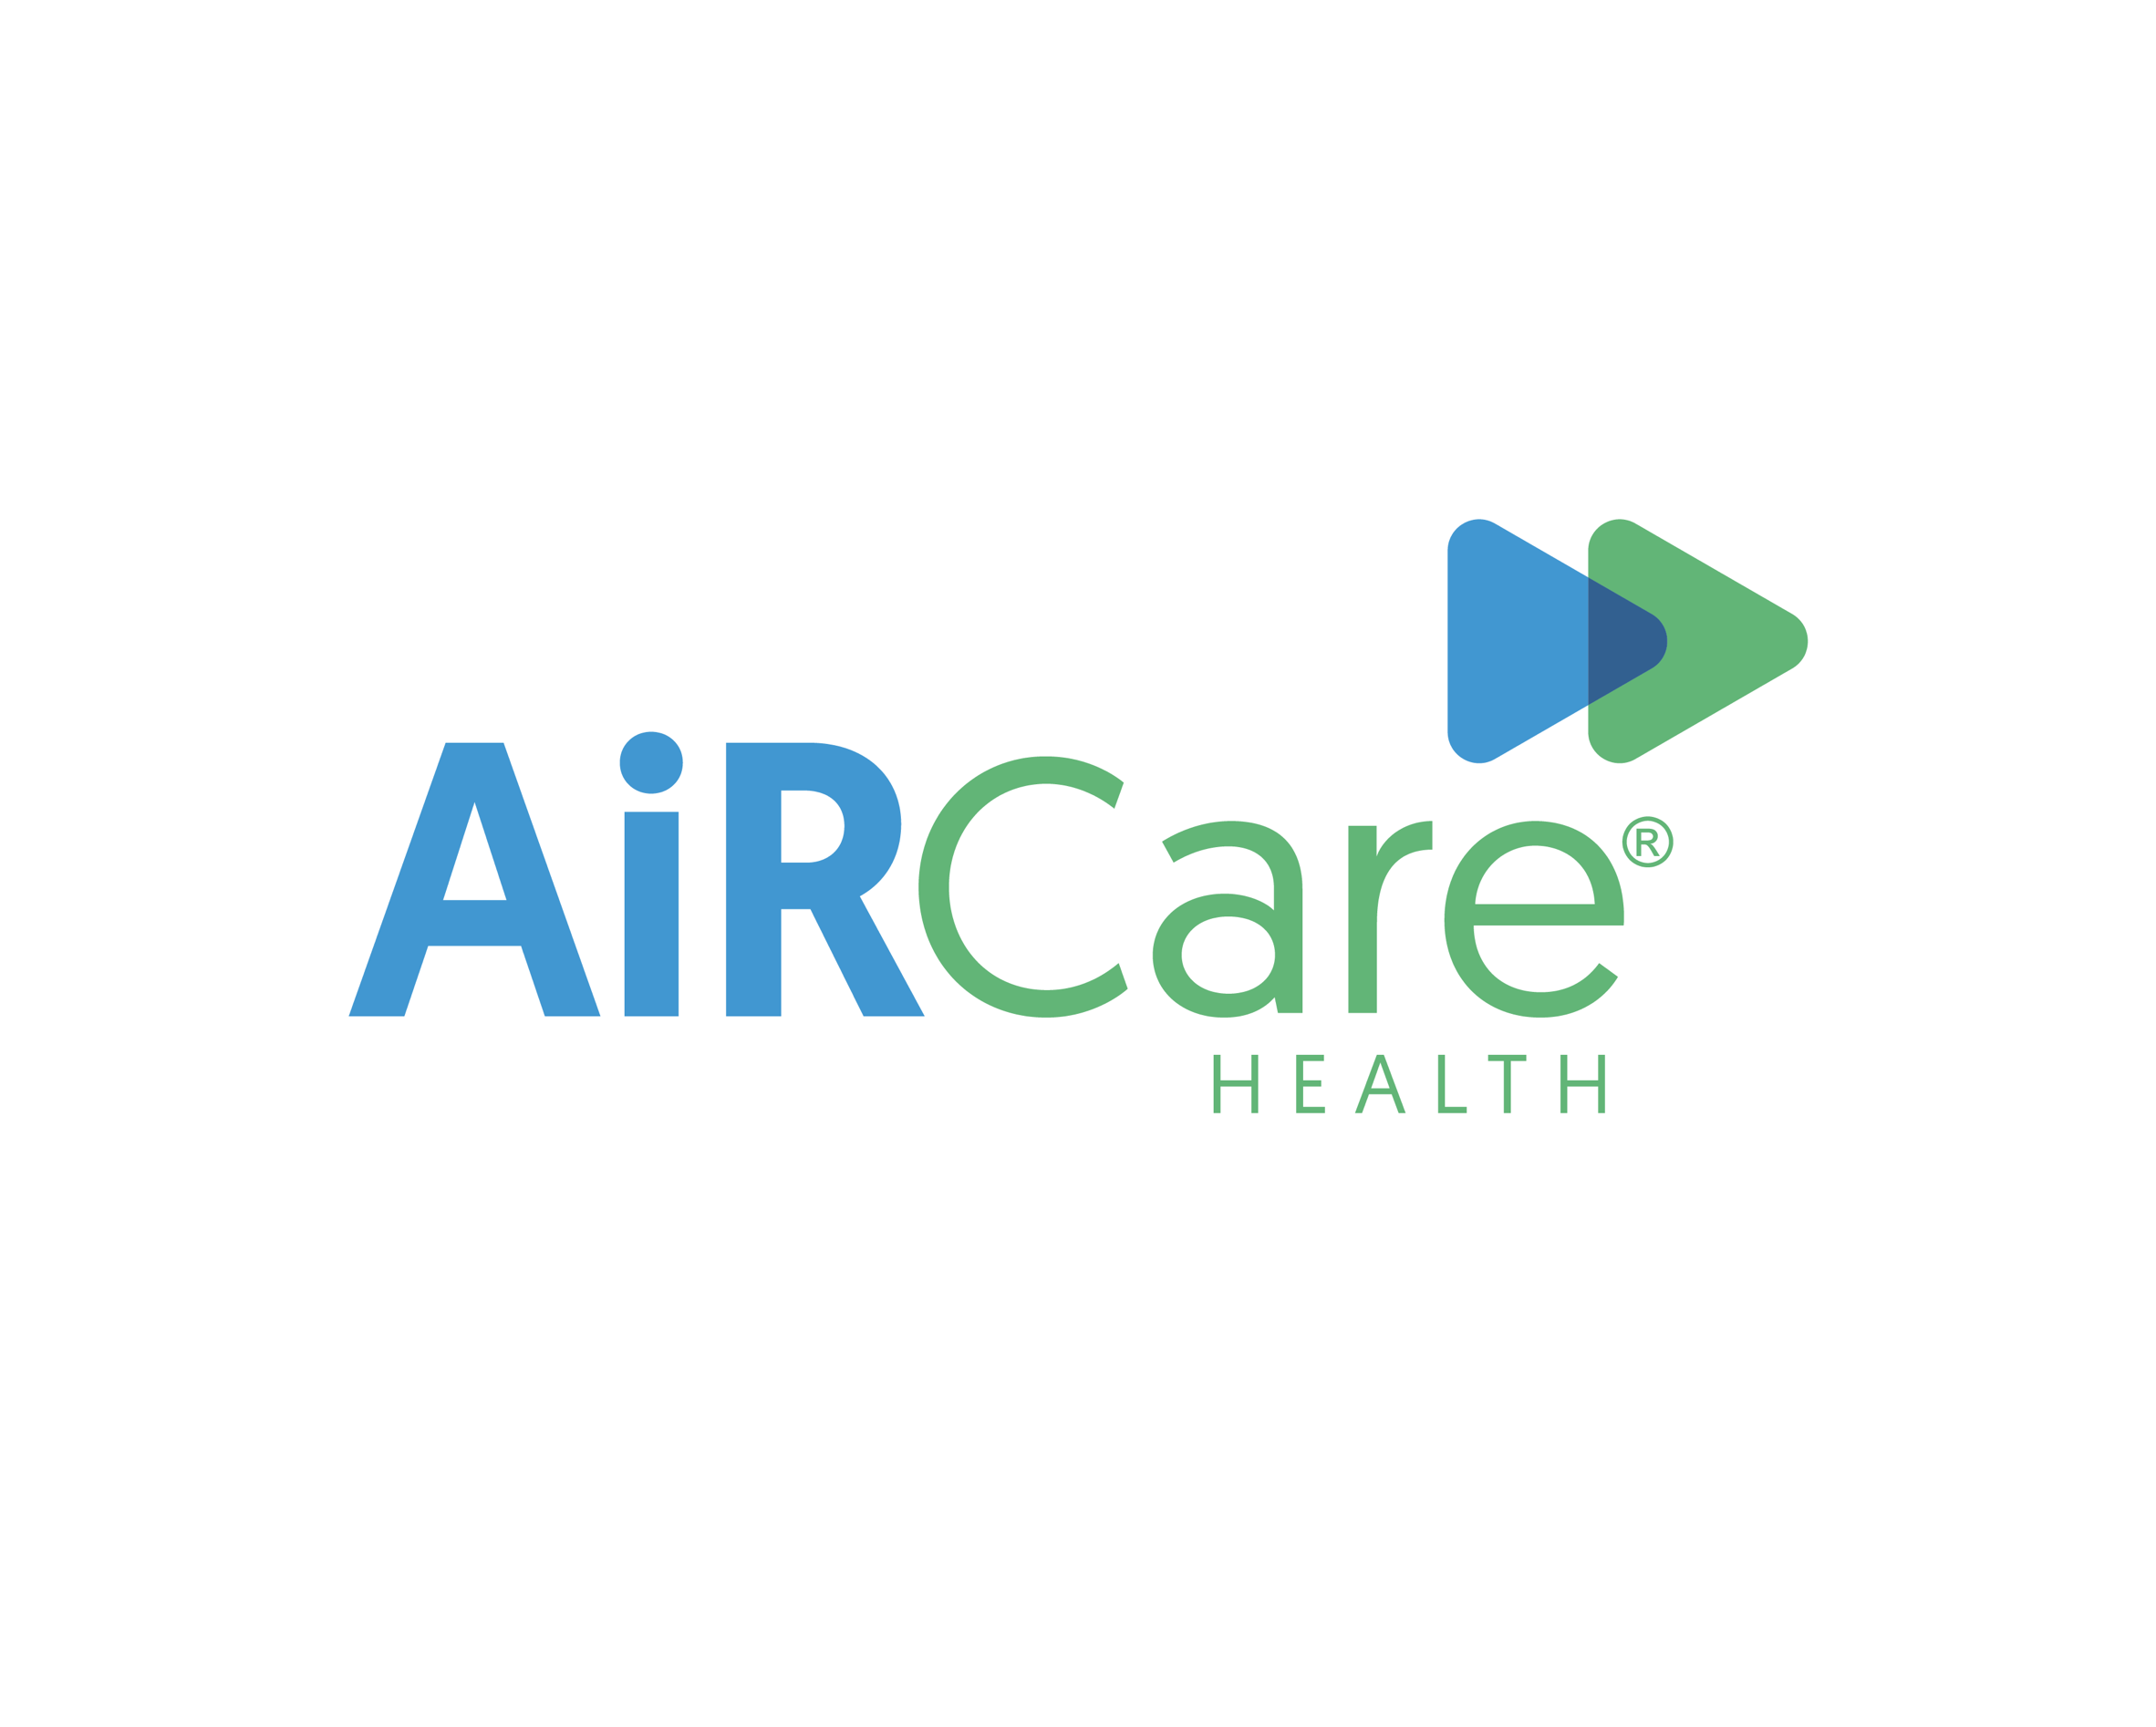 Aircare